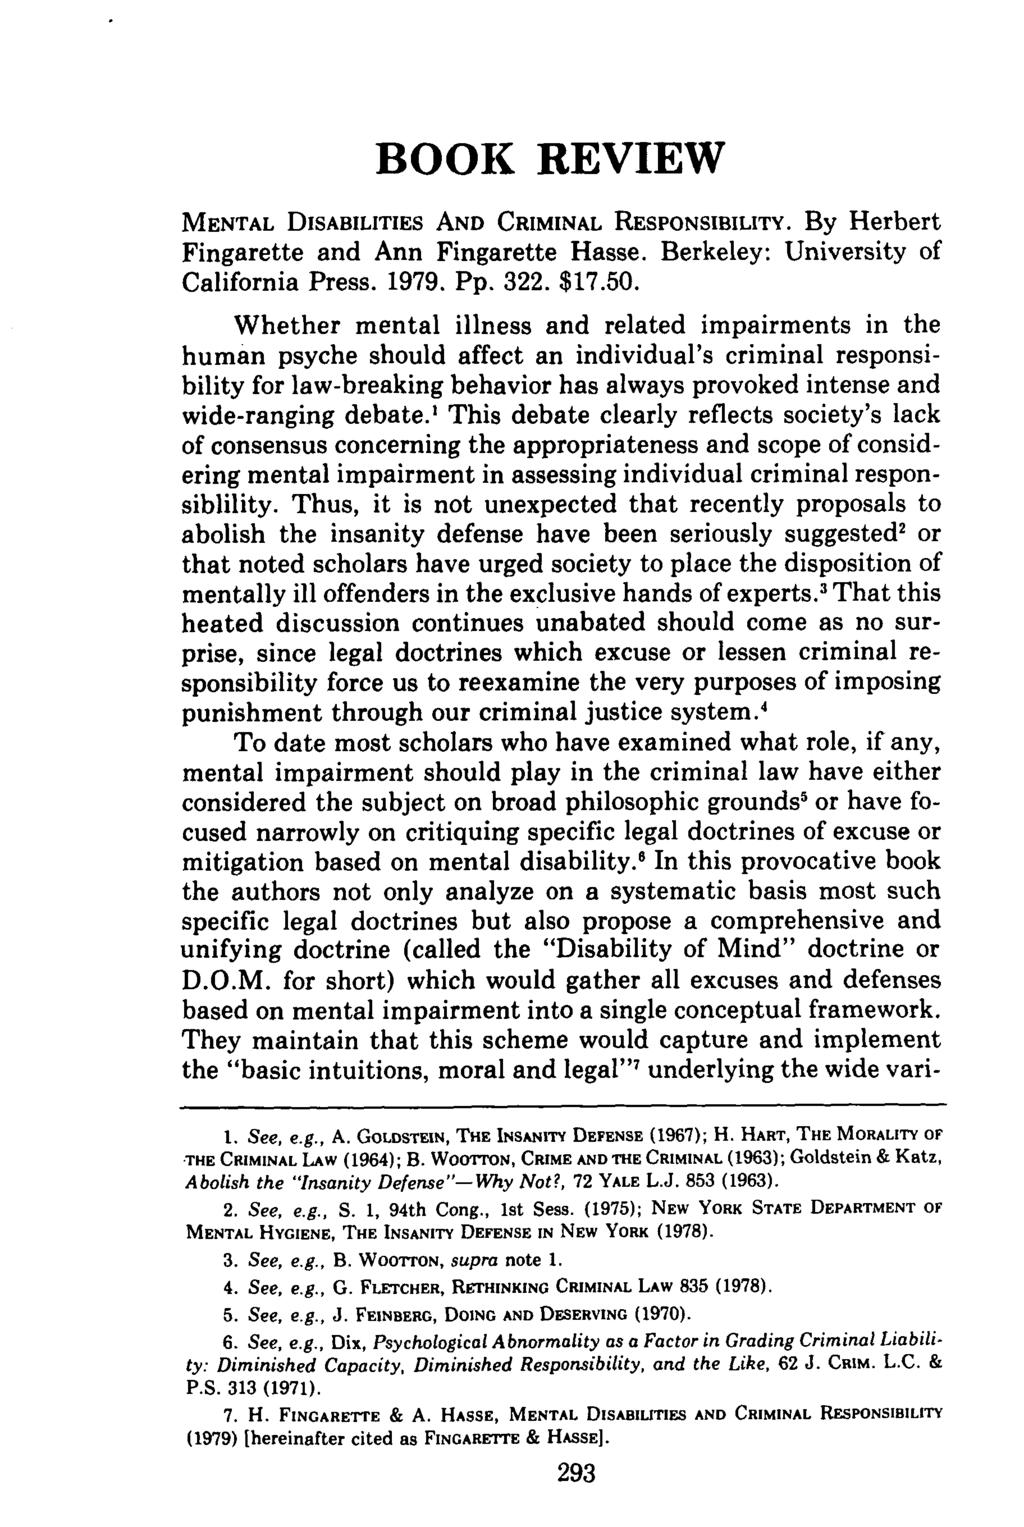 BOOK REVIEW MENTAL DISABILITIES AND CRIMINAL RESPONSIBILITY. By Herbert Fingarette and Ann Fingarette Hasse. Berkeley: University of California Press. 1979. Pp. 322. $17.50.